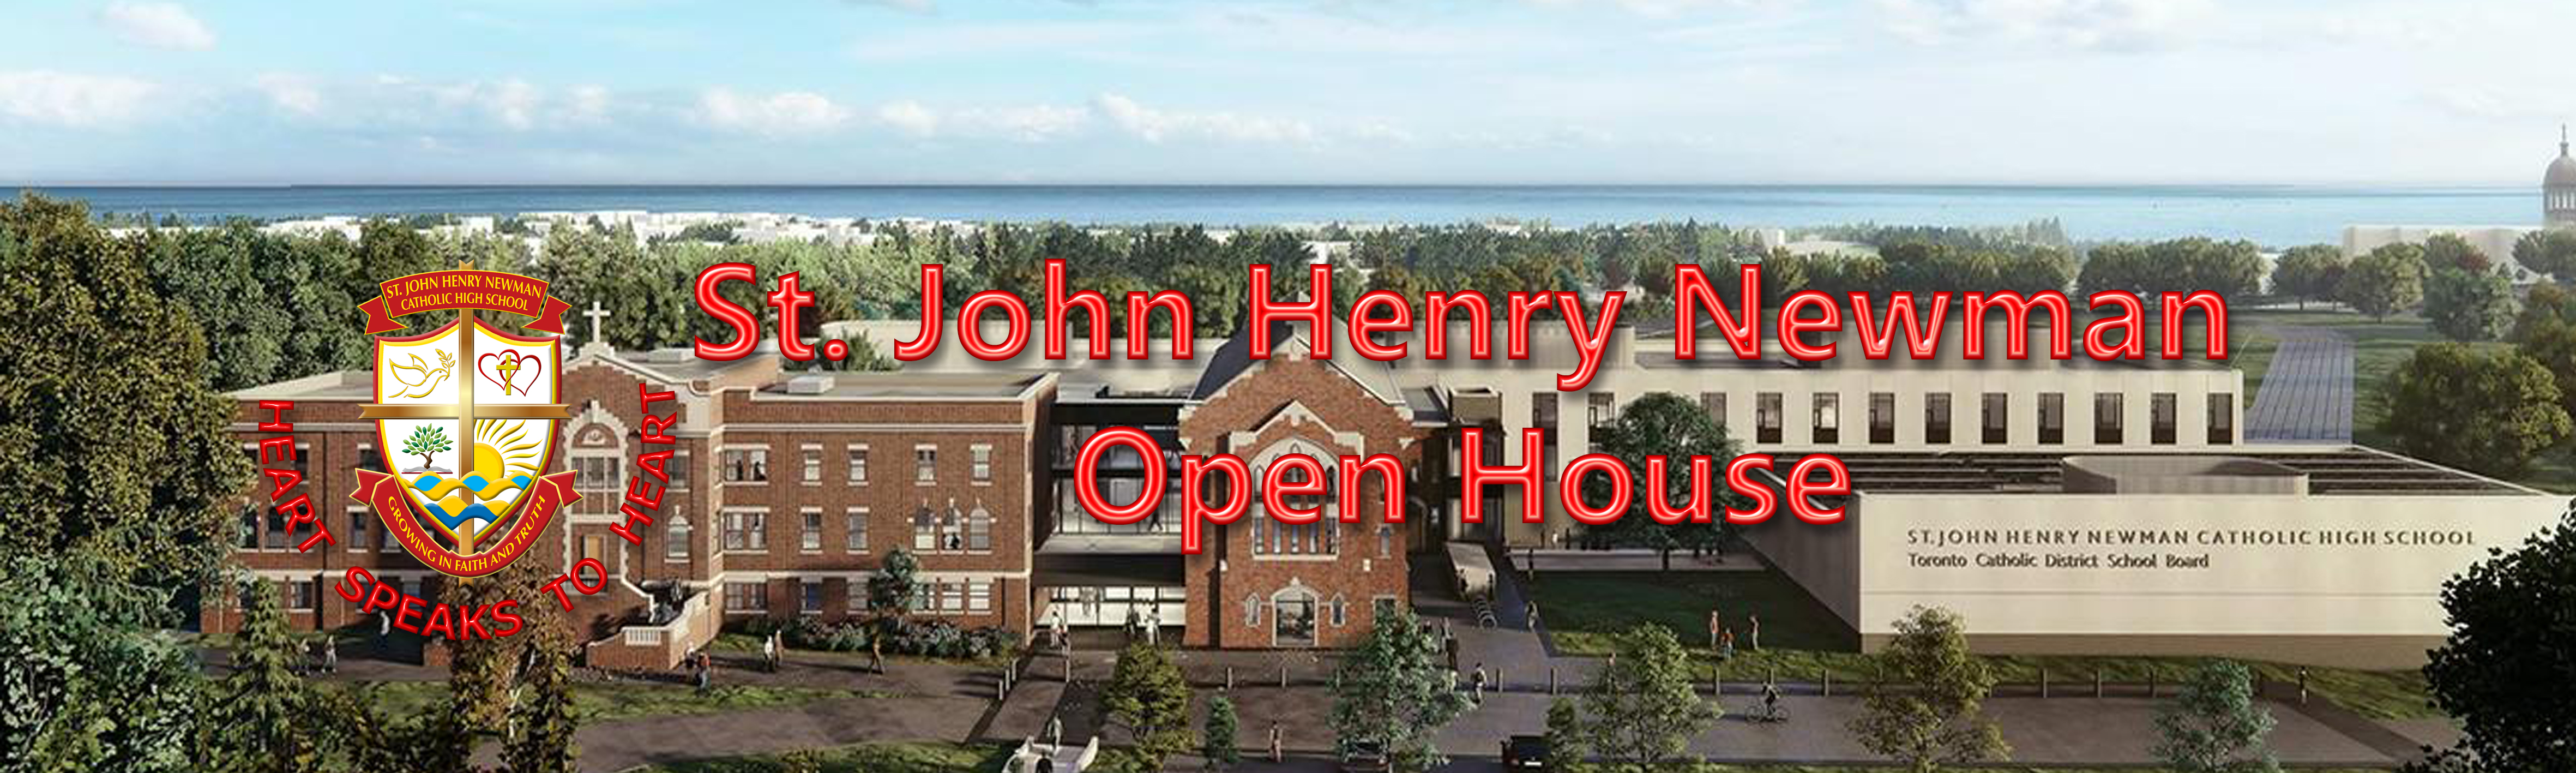 St. John Henry Newman Open House